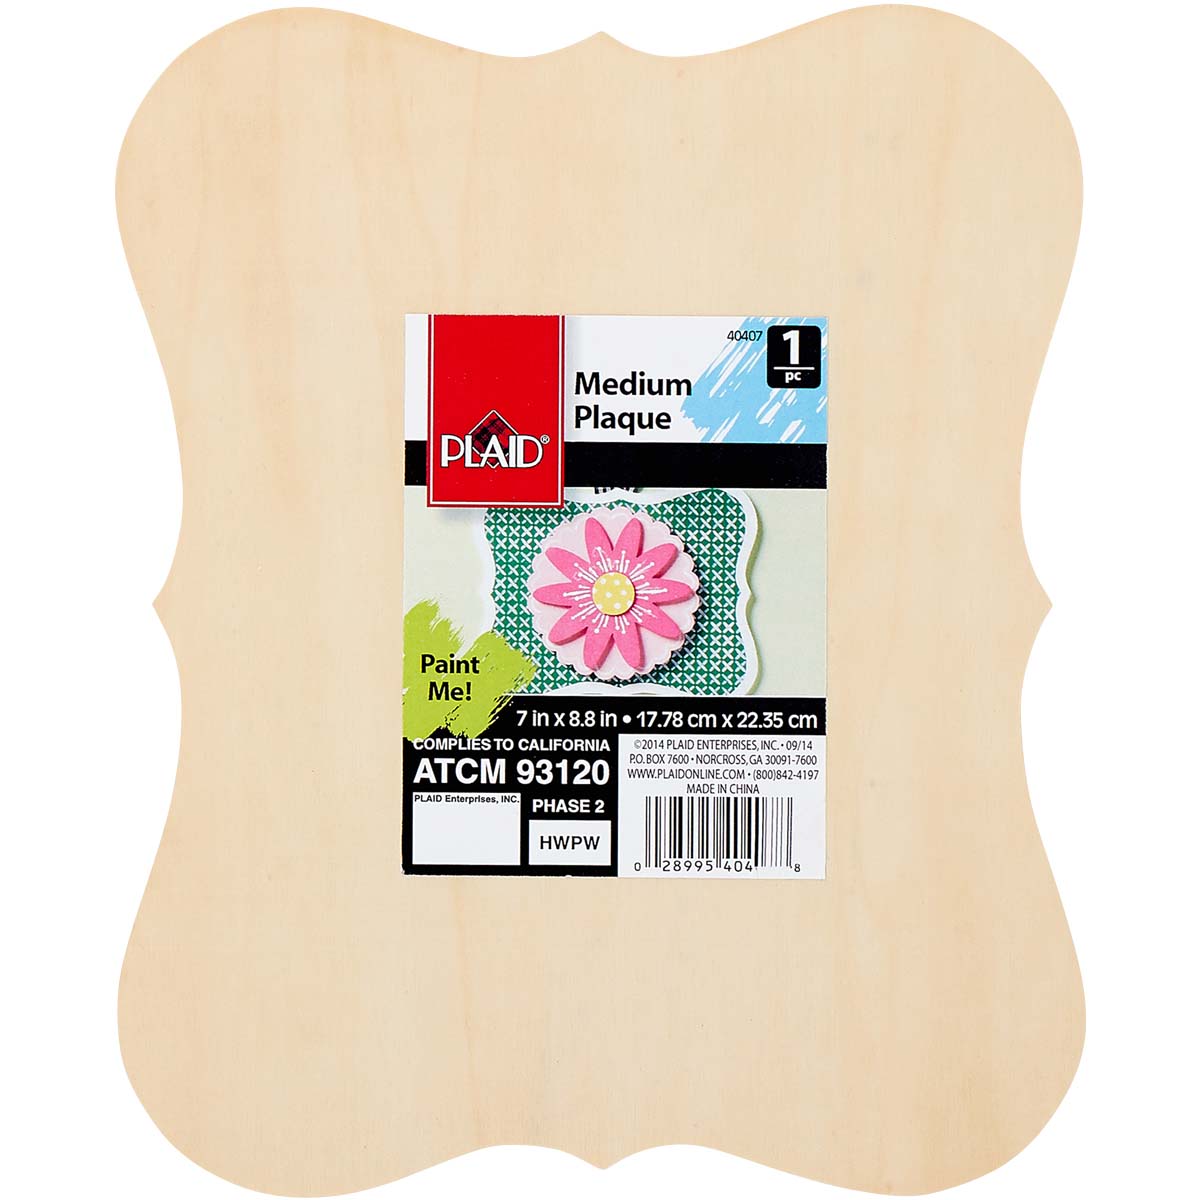 Plaid ® Wood Surfaces - Plaques - Die Cut, Medium - 40407E